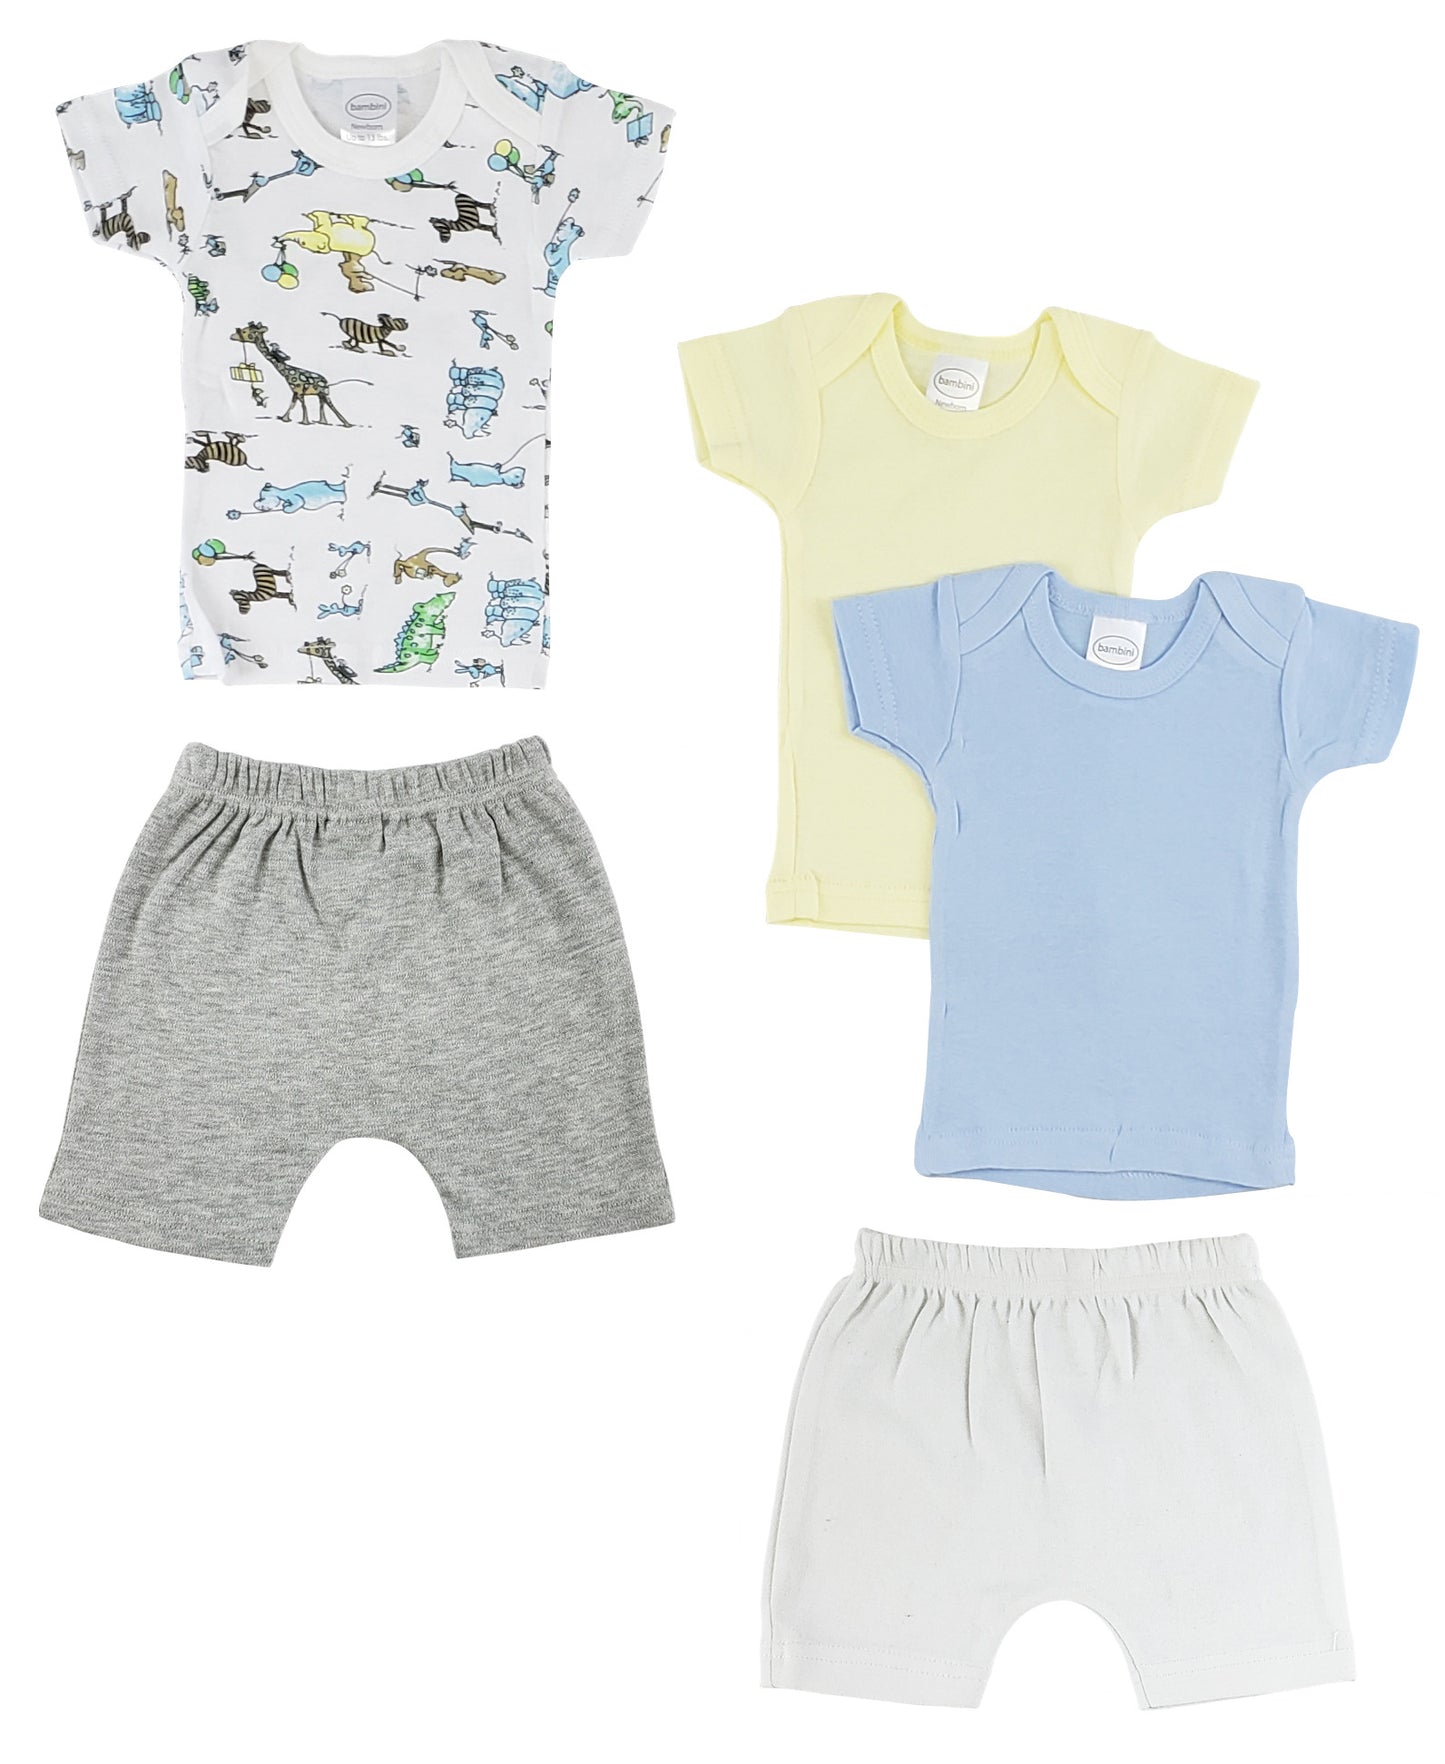 Infant Girls T-Shirts and Shorts CS_0337